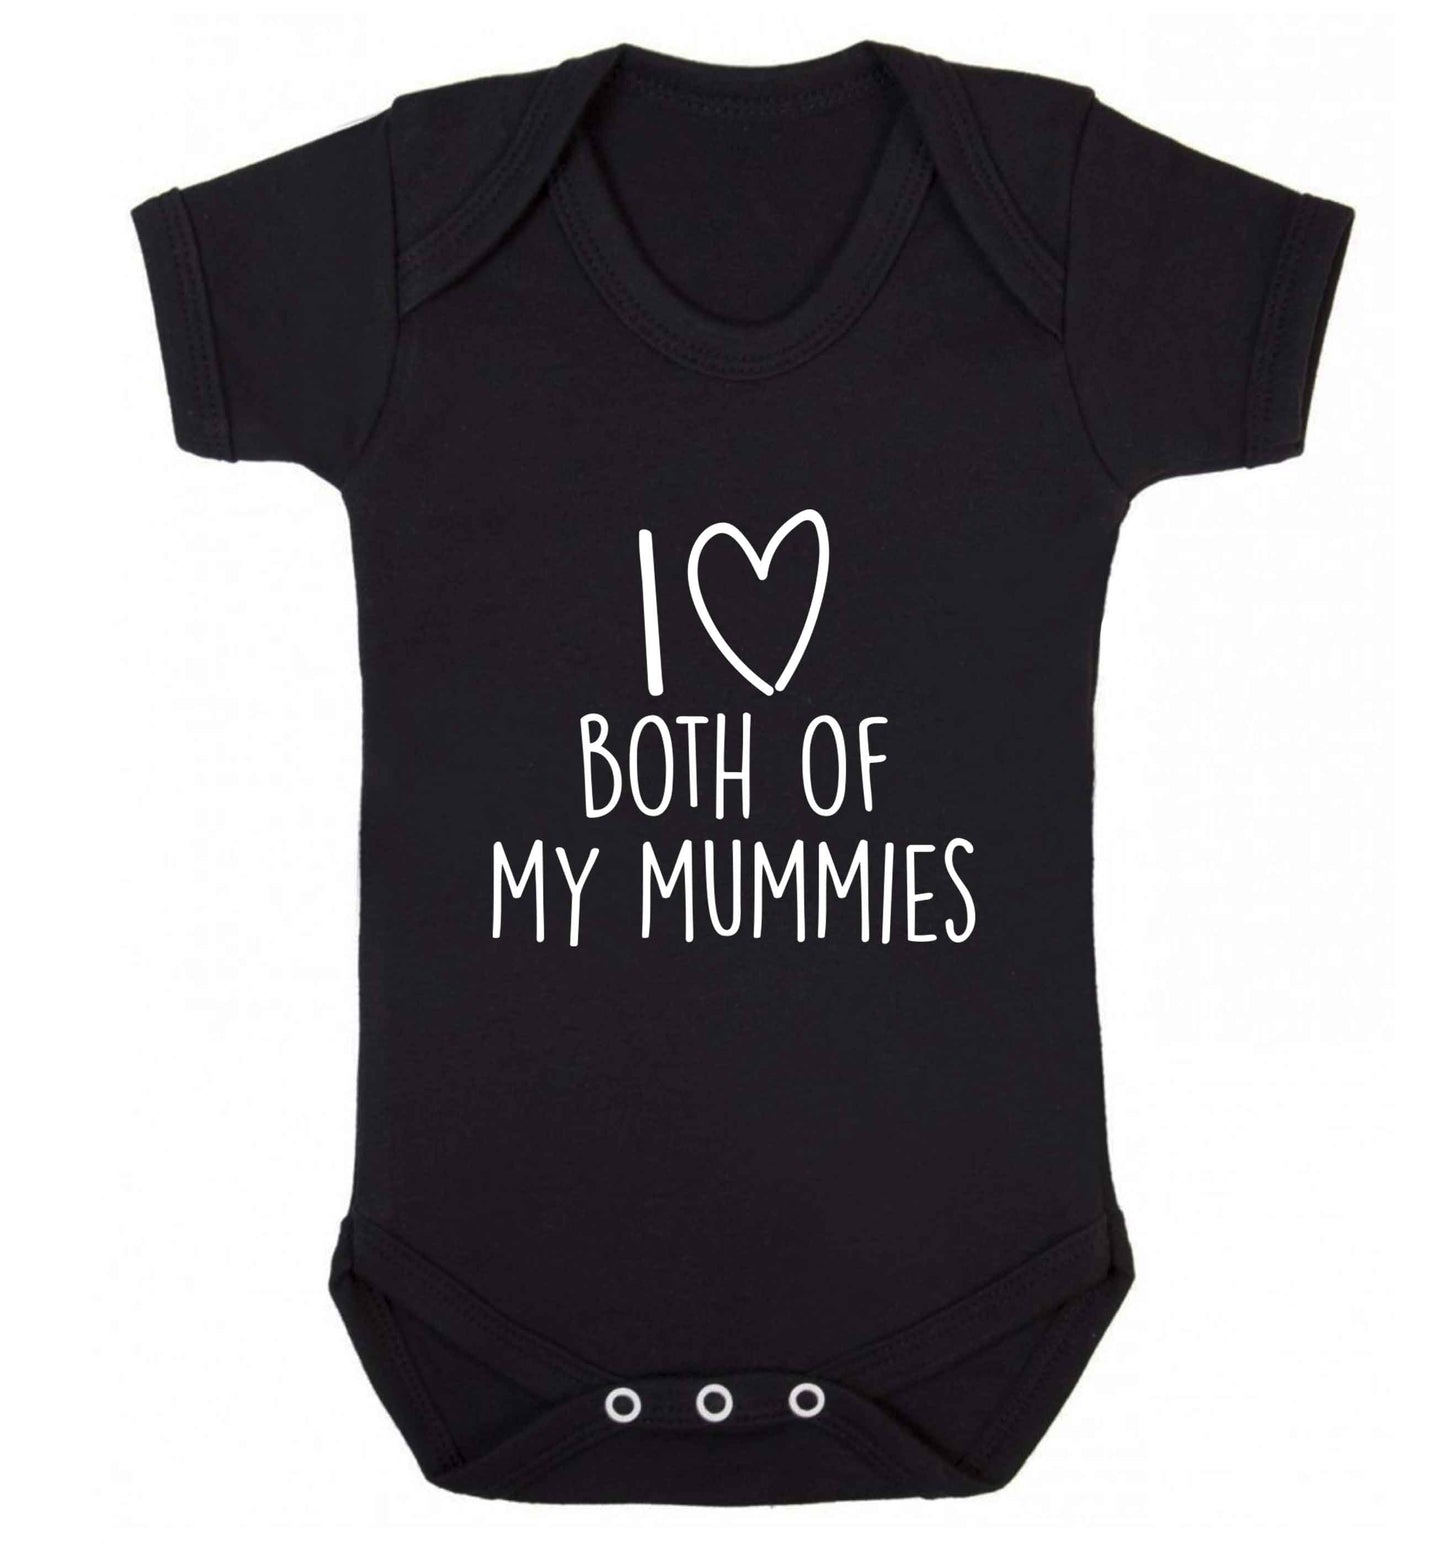 I love both of my mummies baby vest black 18-24 months